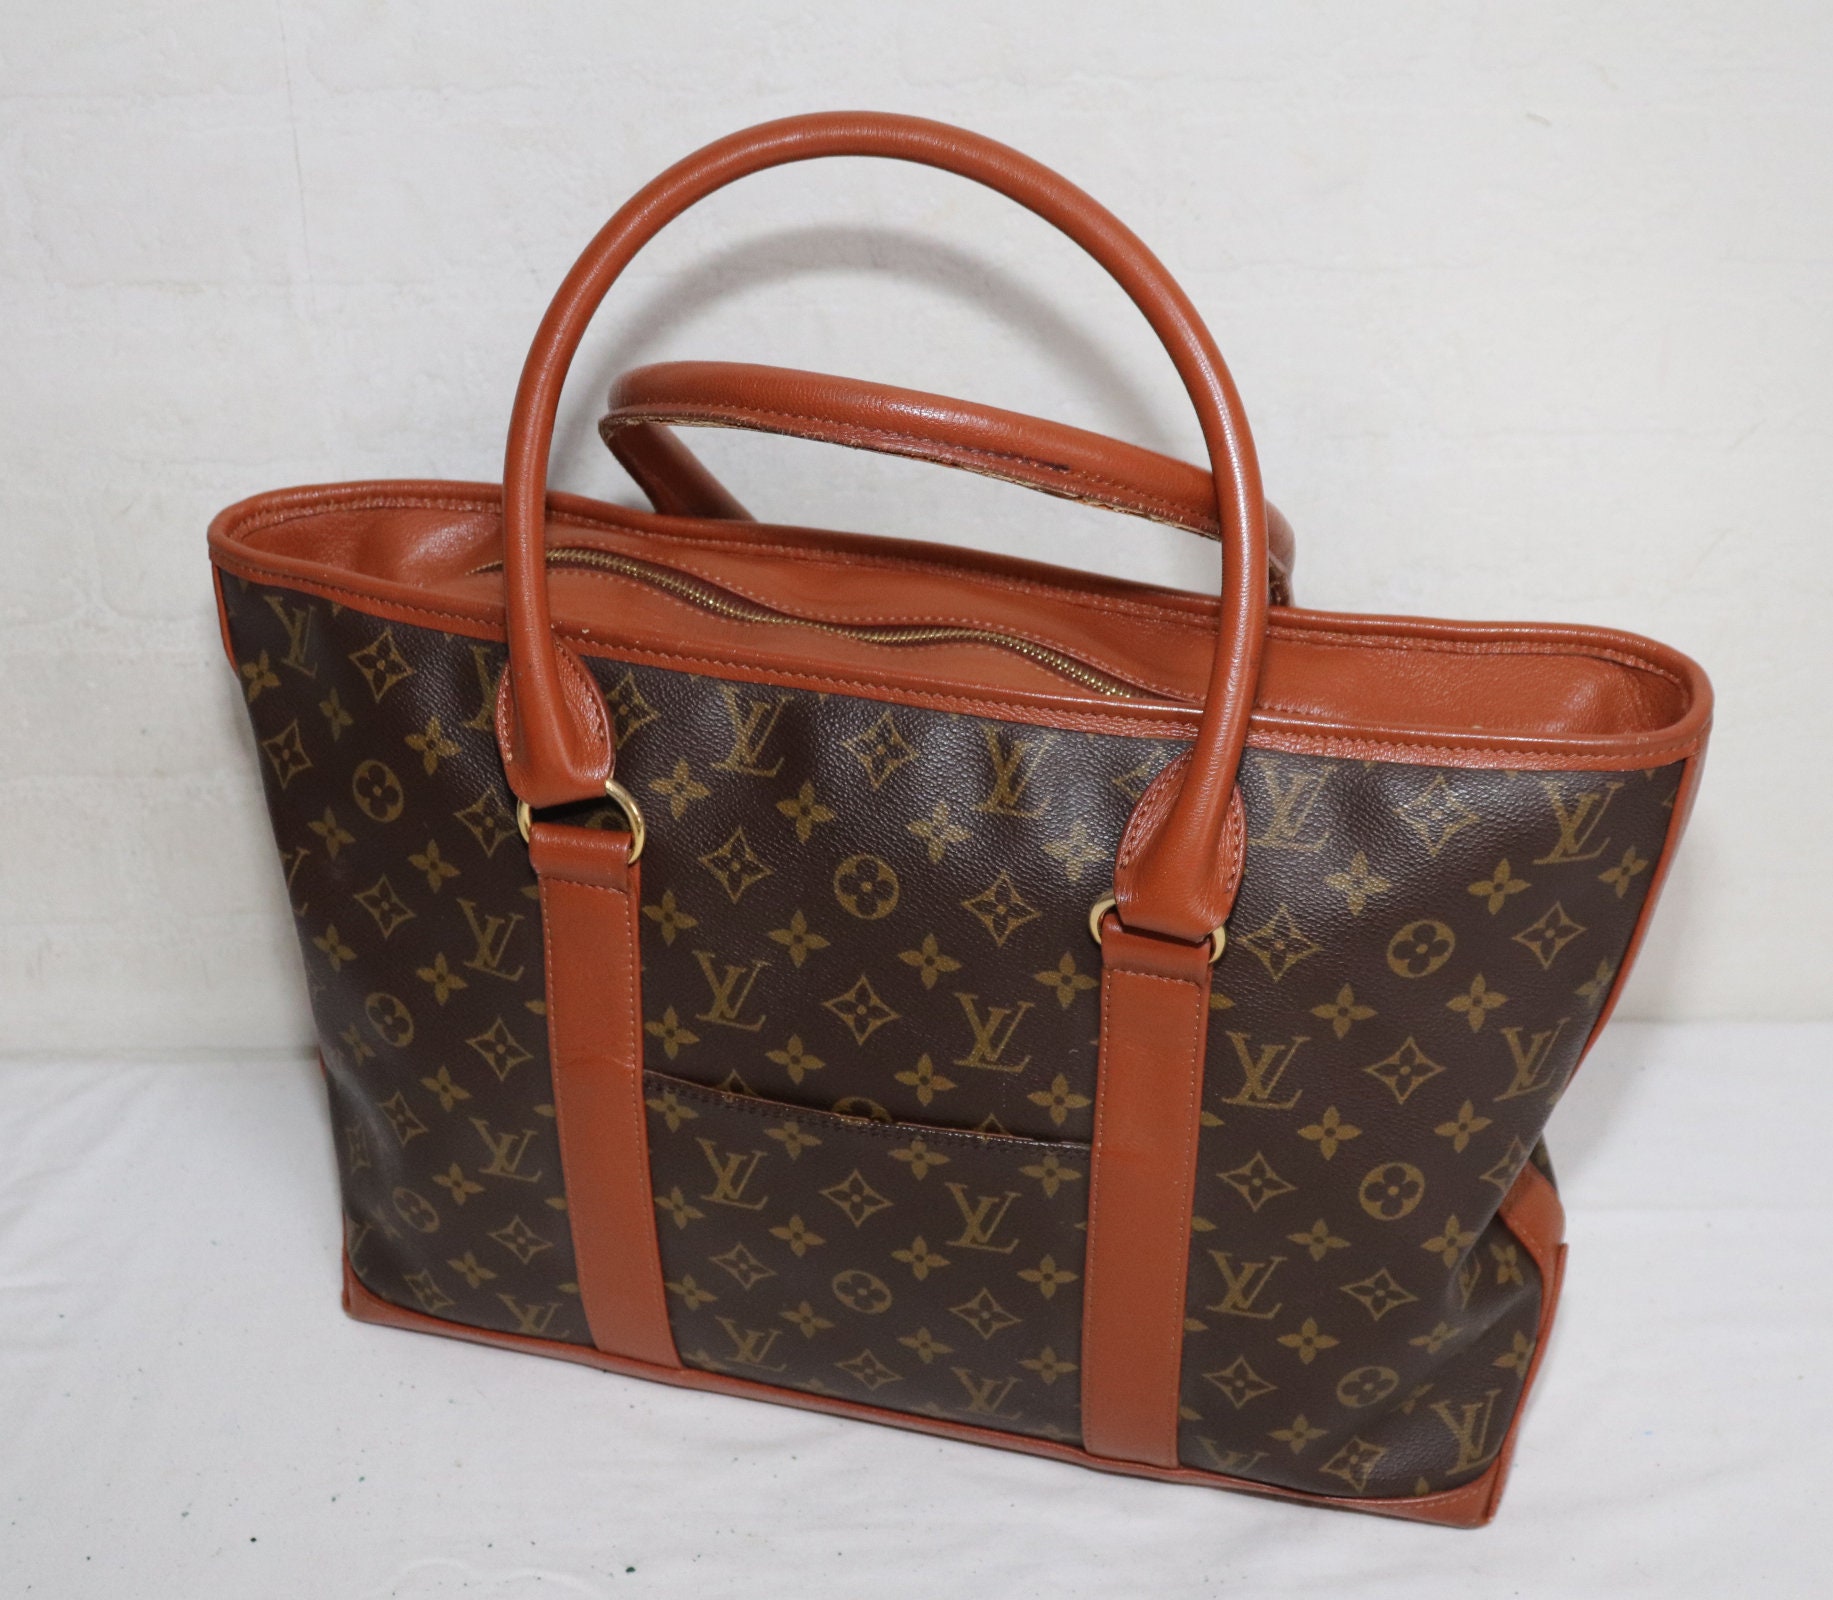 Louis Vuitton 2000 Pre-owned Monogram Sac Shopping Tote Bag - Brown